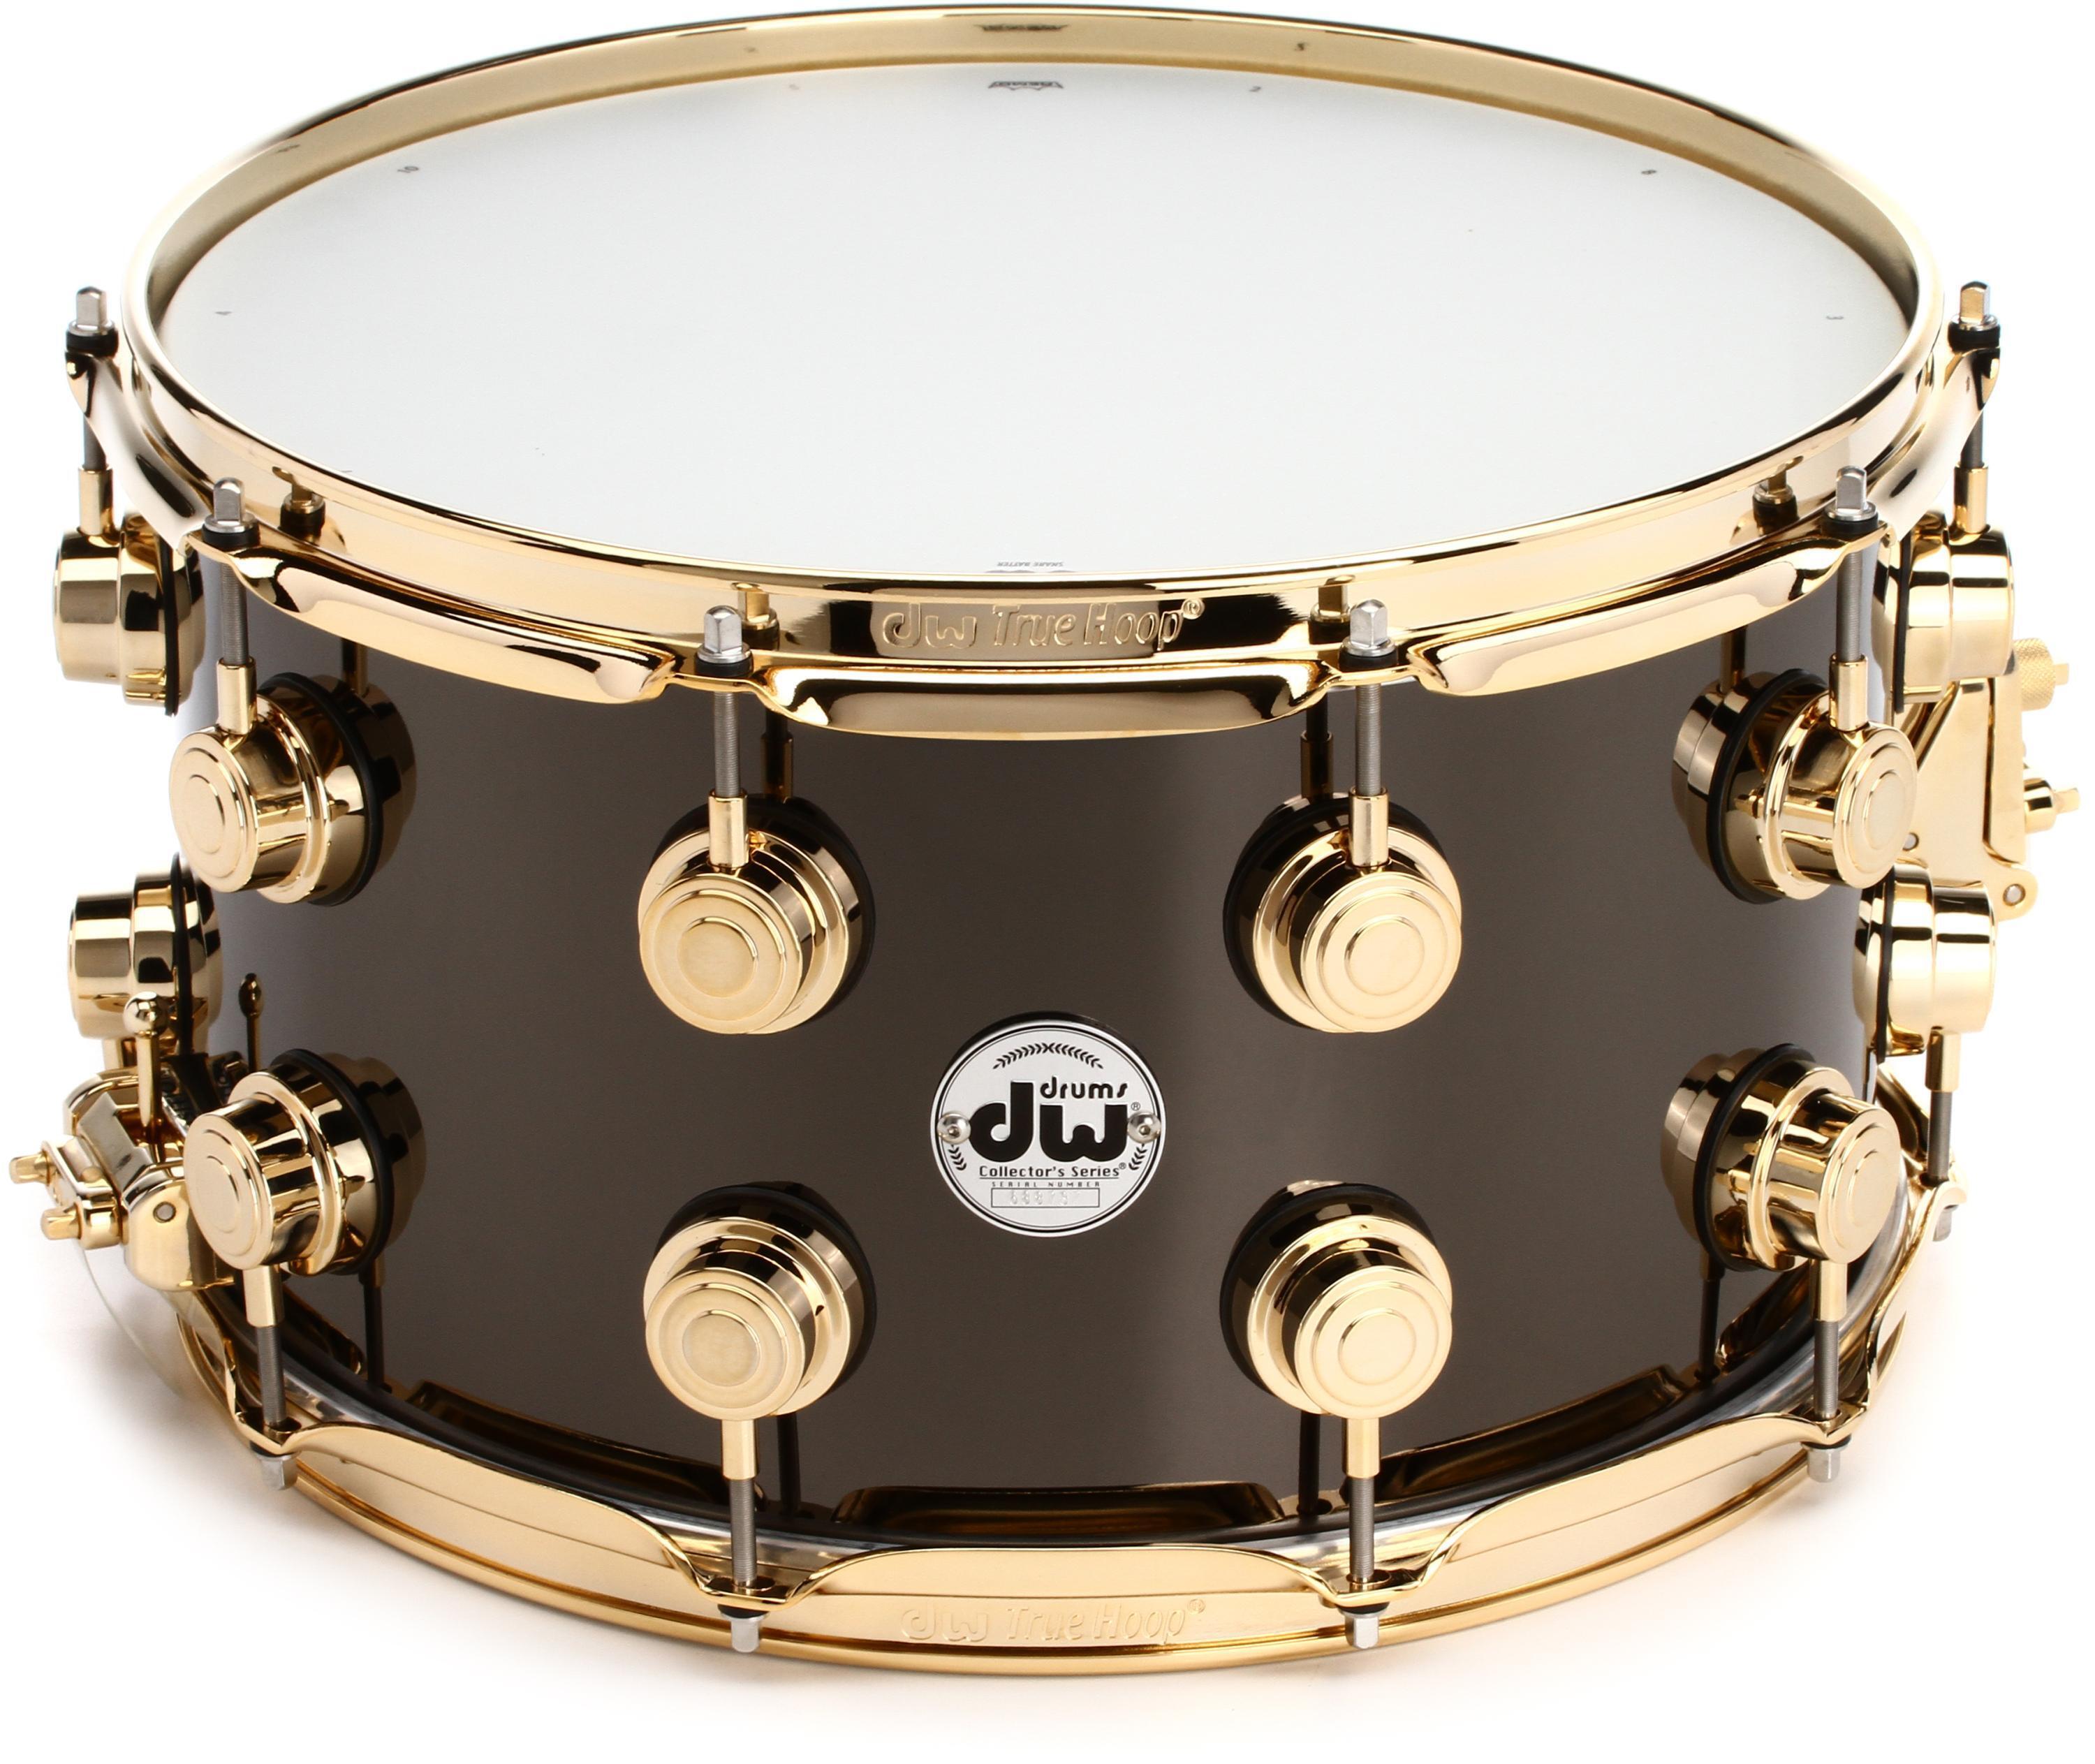 DW Collector's Series Metal Snare Drum - 8 x 14 inch - Black Nickel